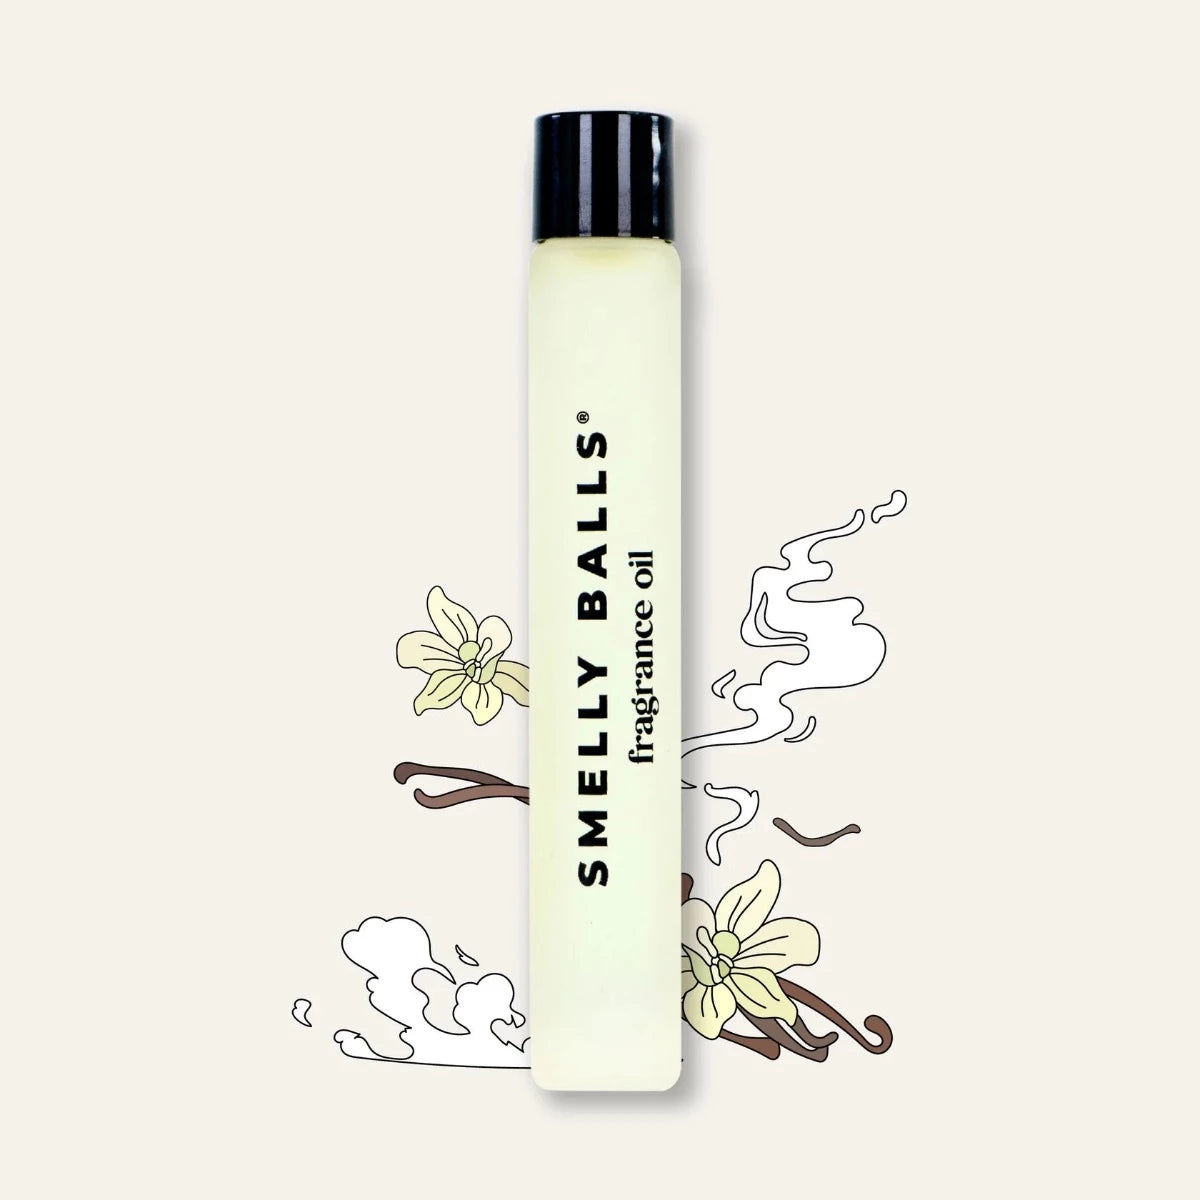 Smelly Balls - Fragrance Oil Tobacco Vanilla